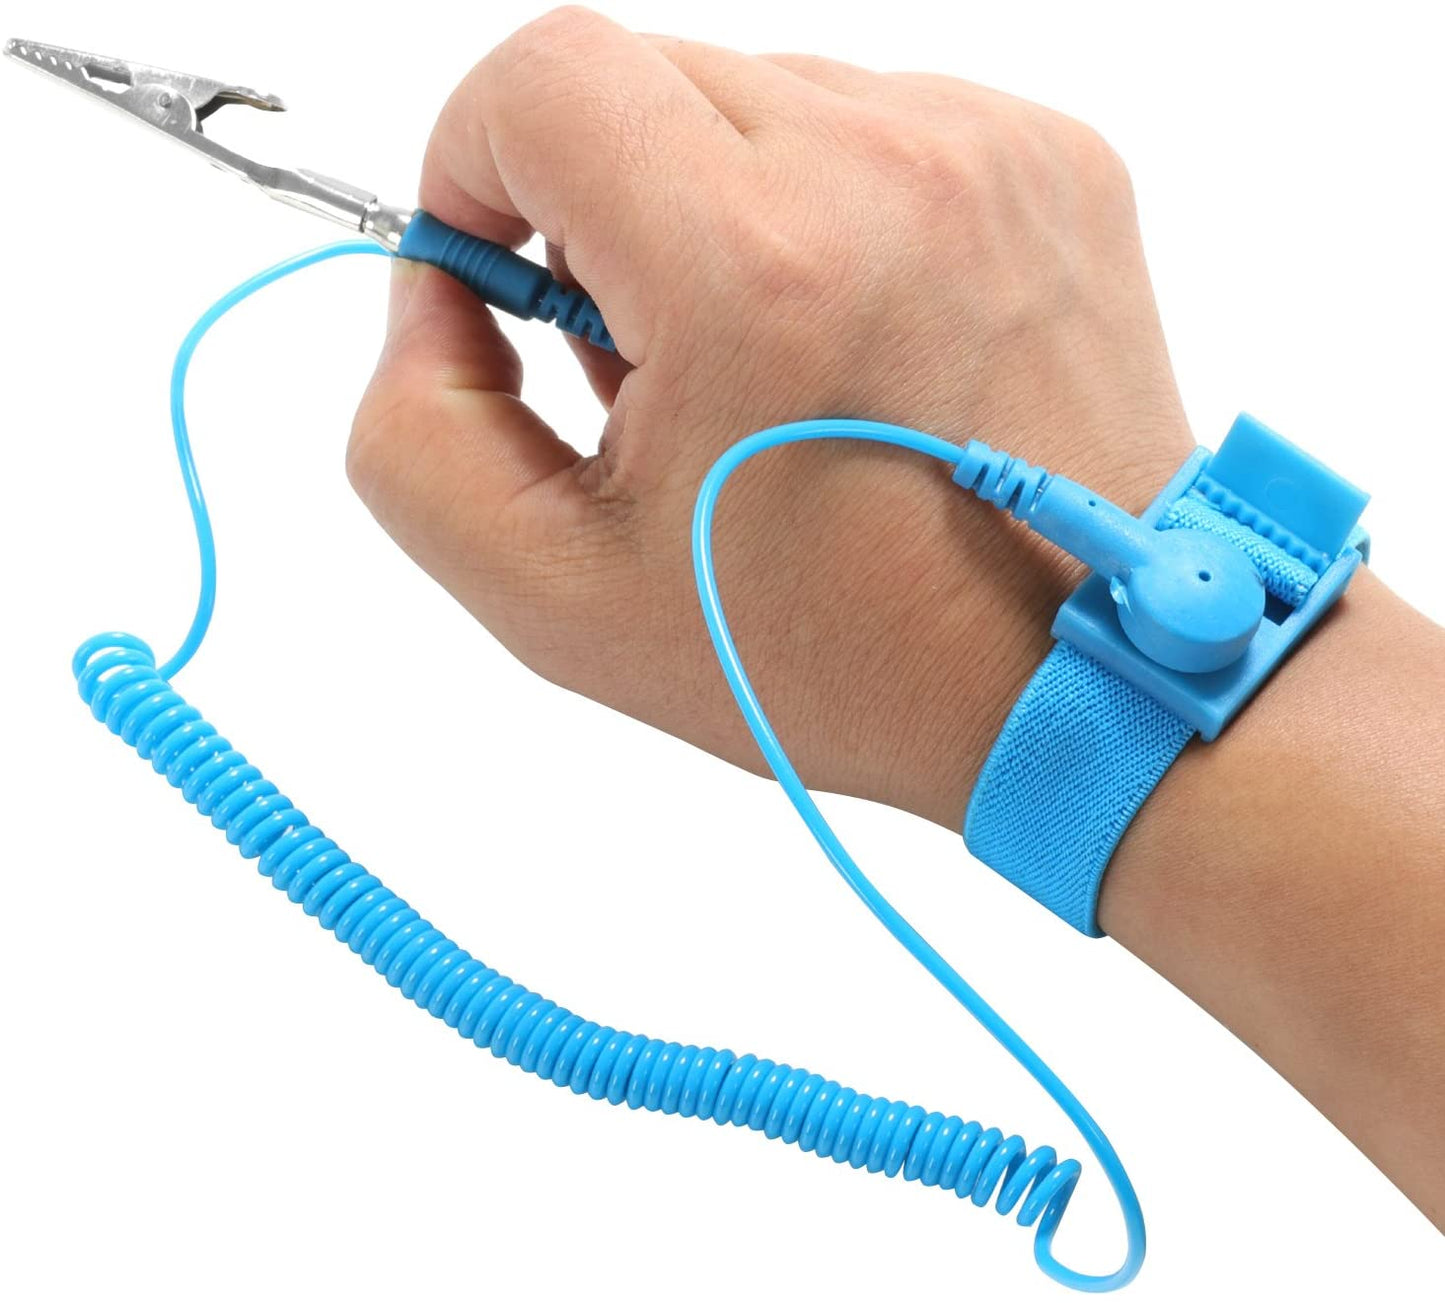 2x Blue Anti Static ESD Grounding Cord Adjustable Wrist Strap PC Phone Repairs